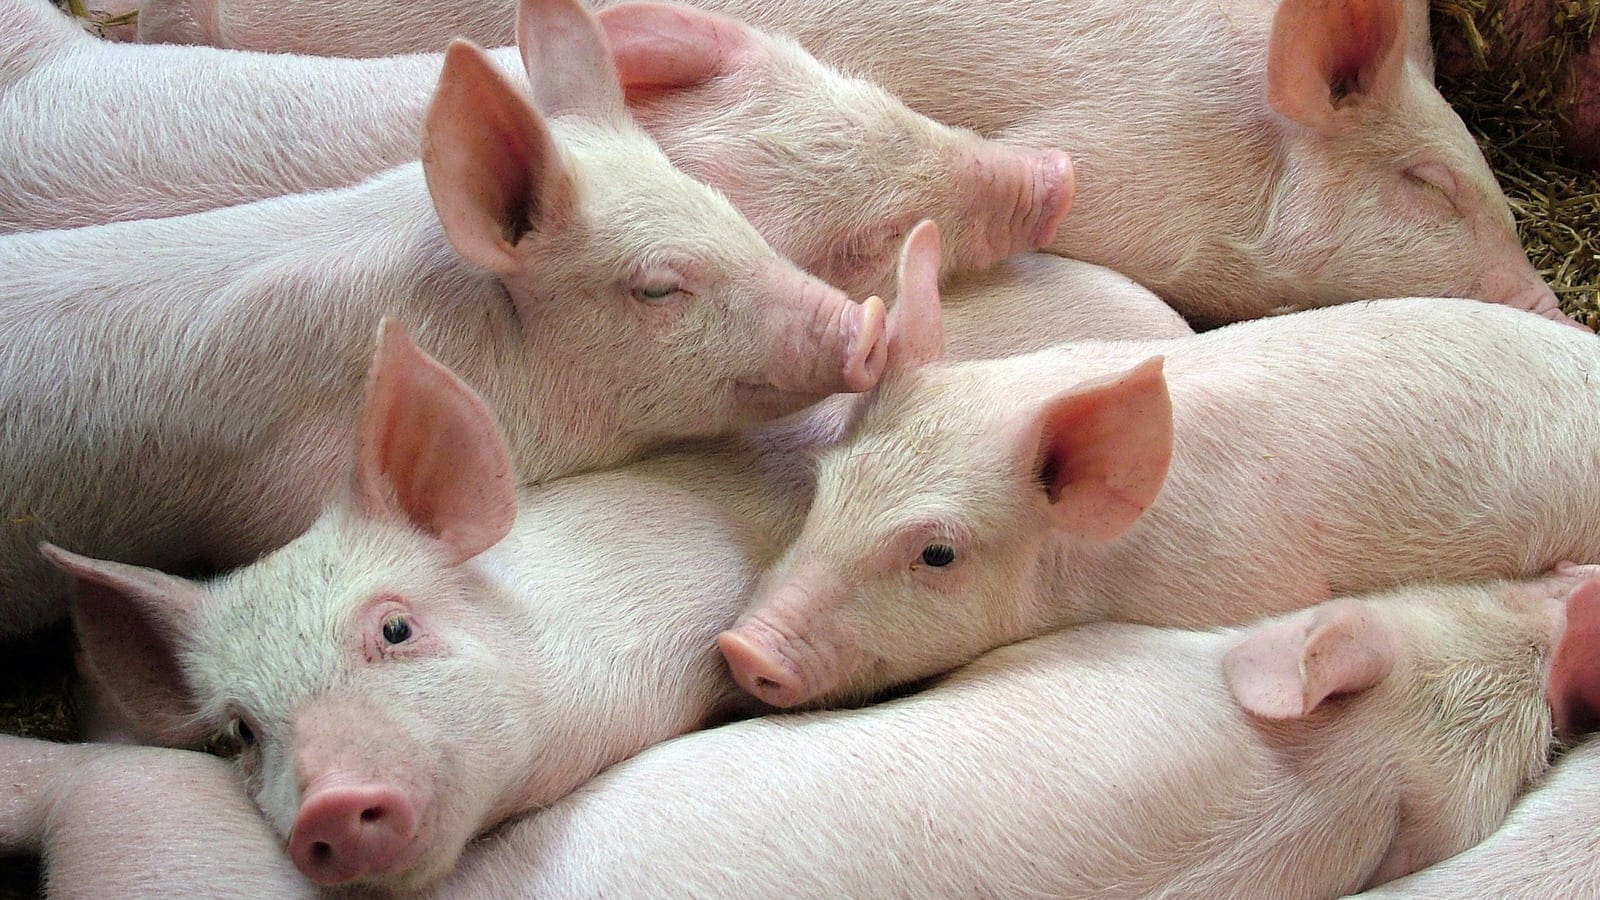 Kenyan slaughter houses on spot for offering low quality pork resulting from poor livestock handling